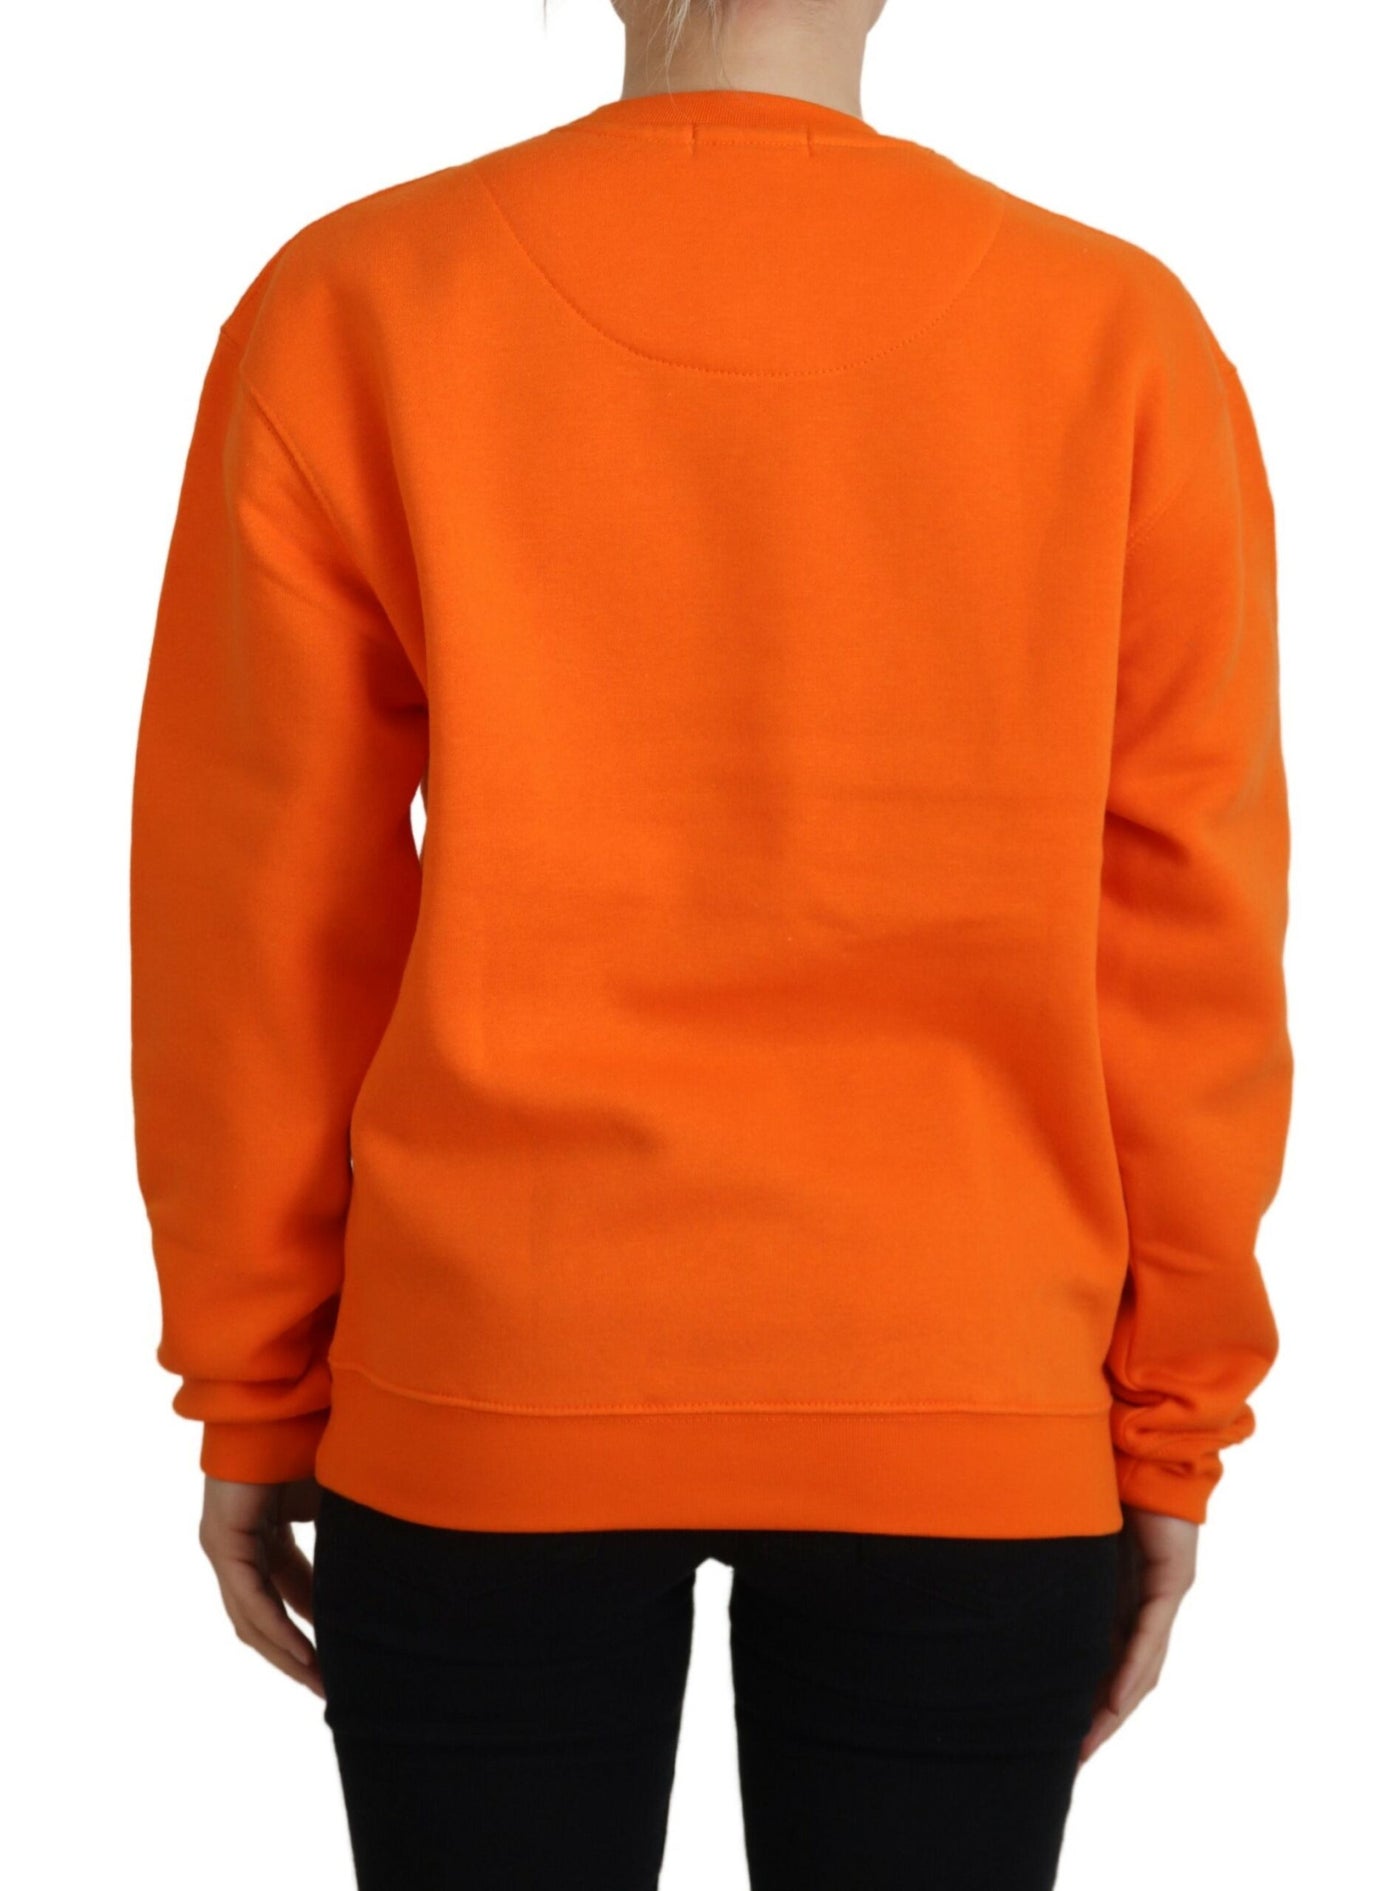 Orange Printed Long Sleeves Pullover Sweater